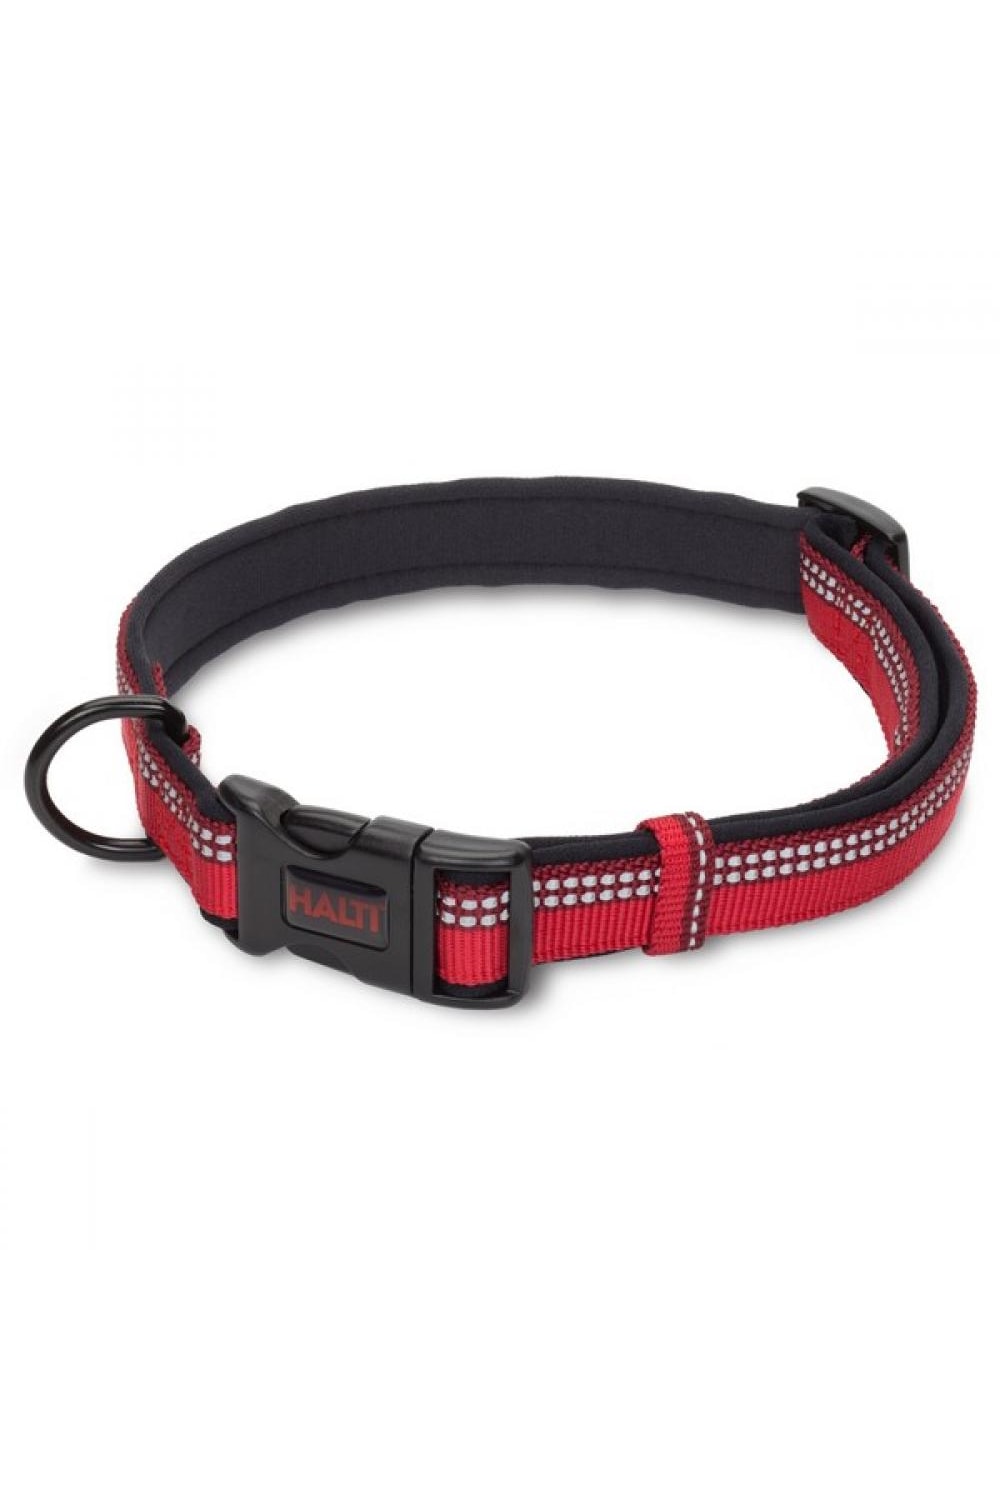 Company Of Animals Halti Dog Collar (Red) (Large)